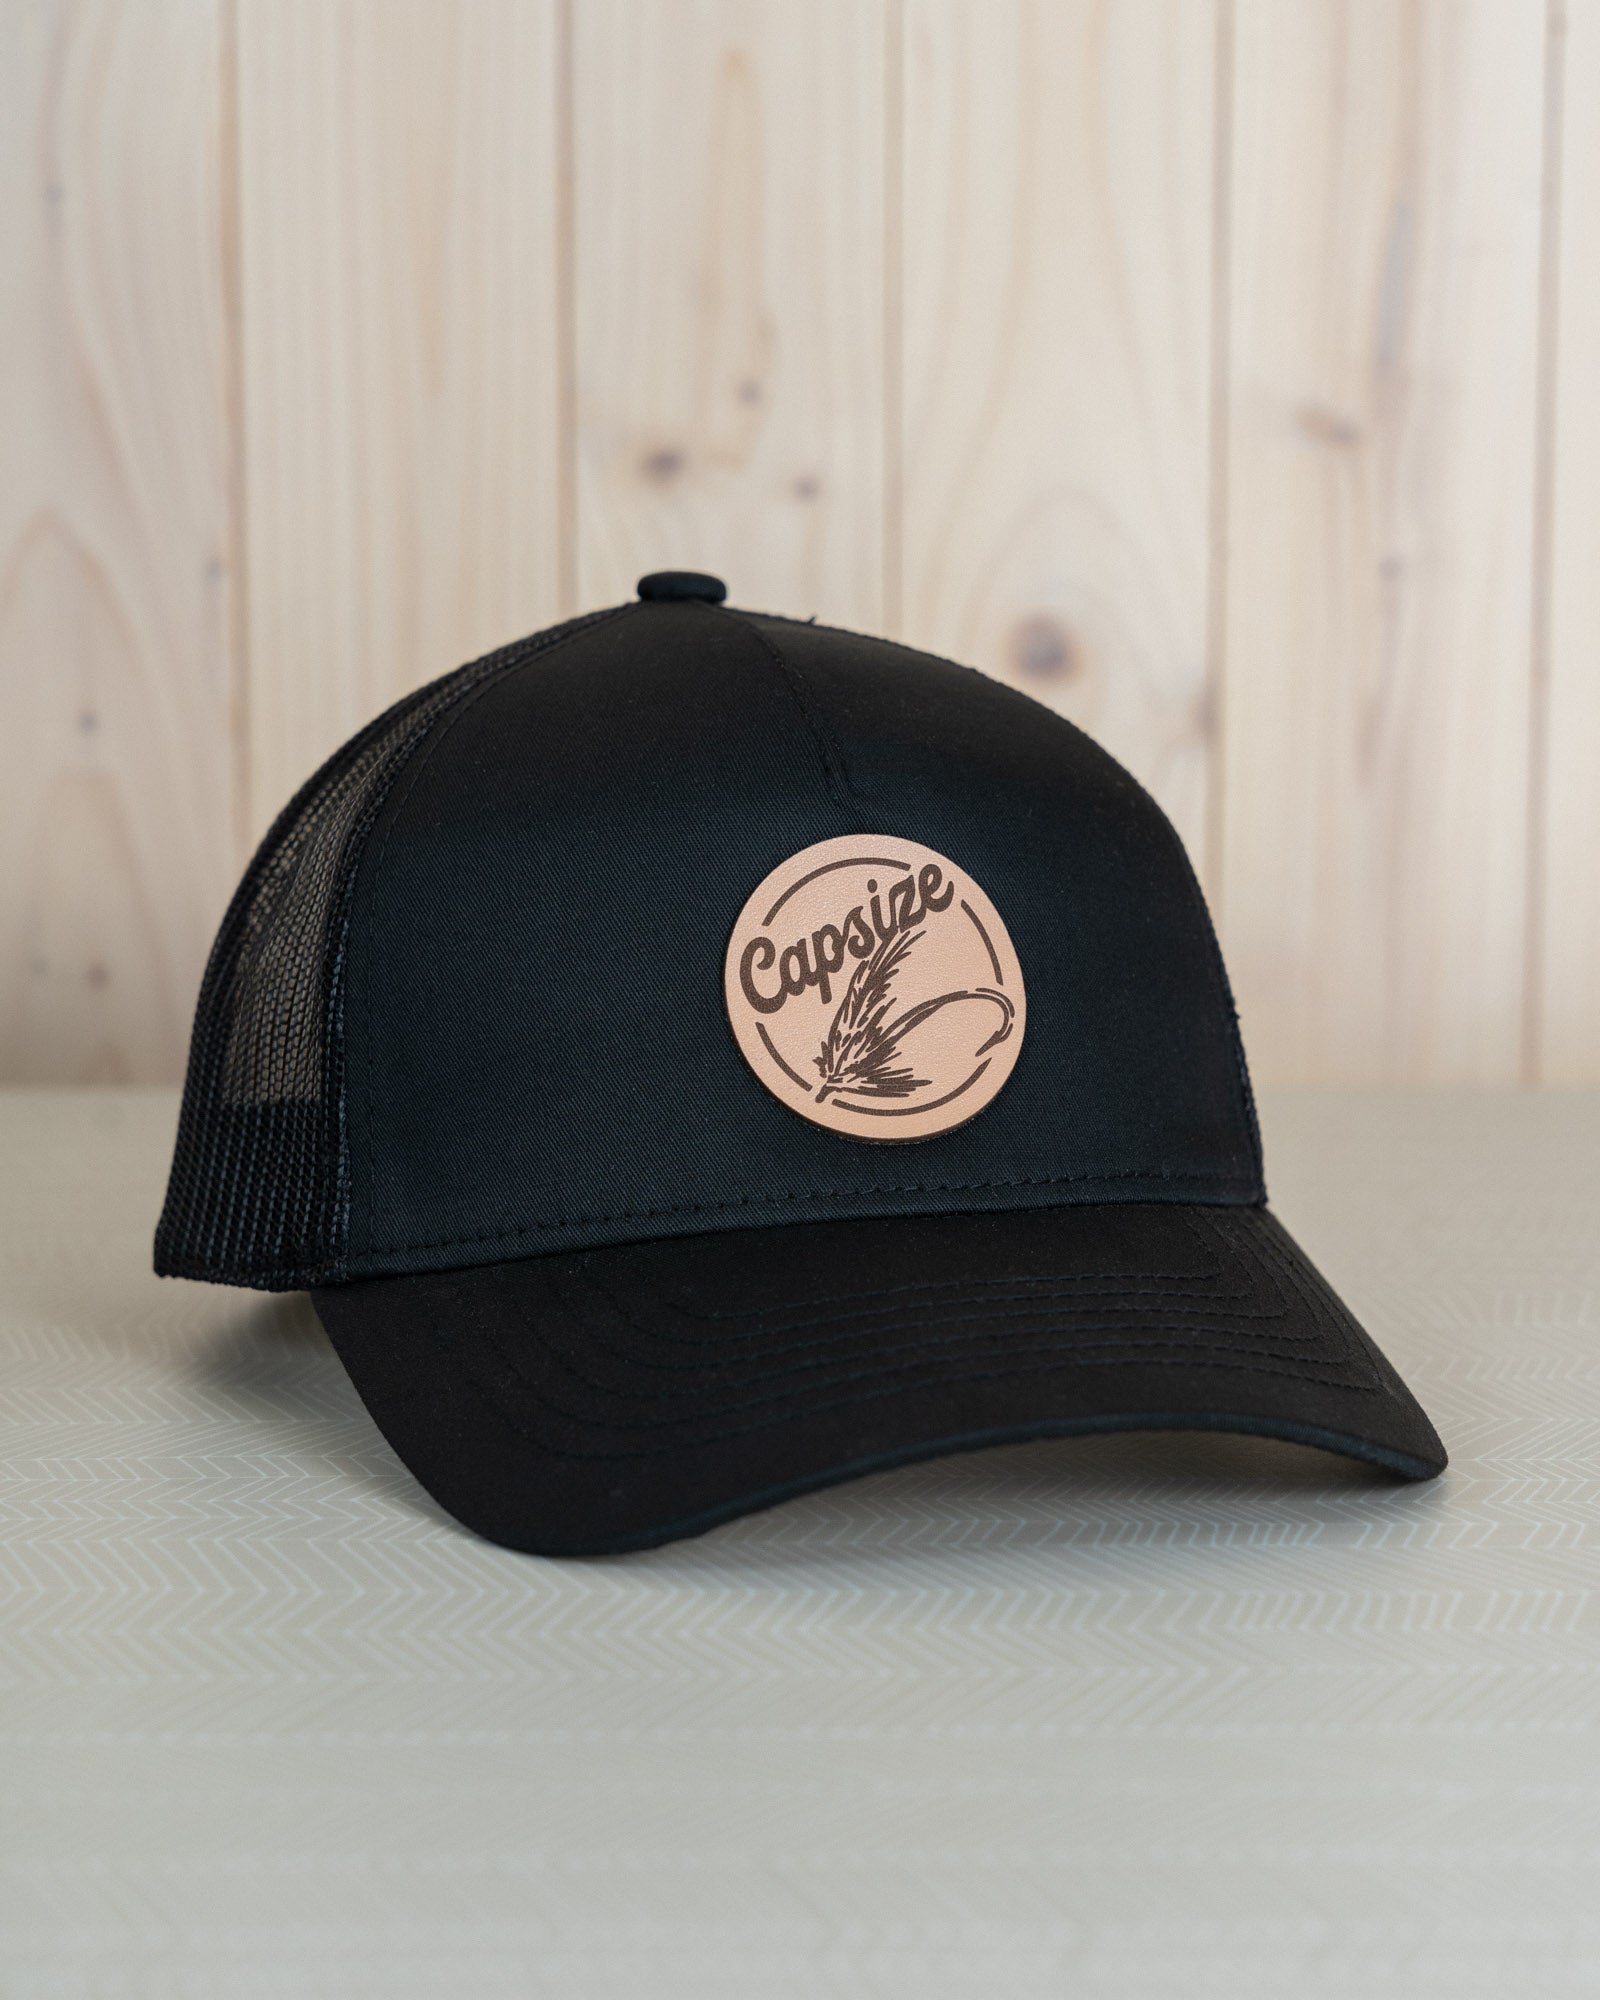 Low Profile Ponytail Cap | Fly Fishing Style Caps | Dad Baseball Caps |Fishing Cap | Women's Baseball Caps | Baby Blue Caps | Light Pink Cap